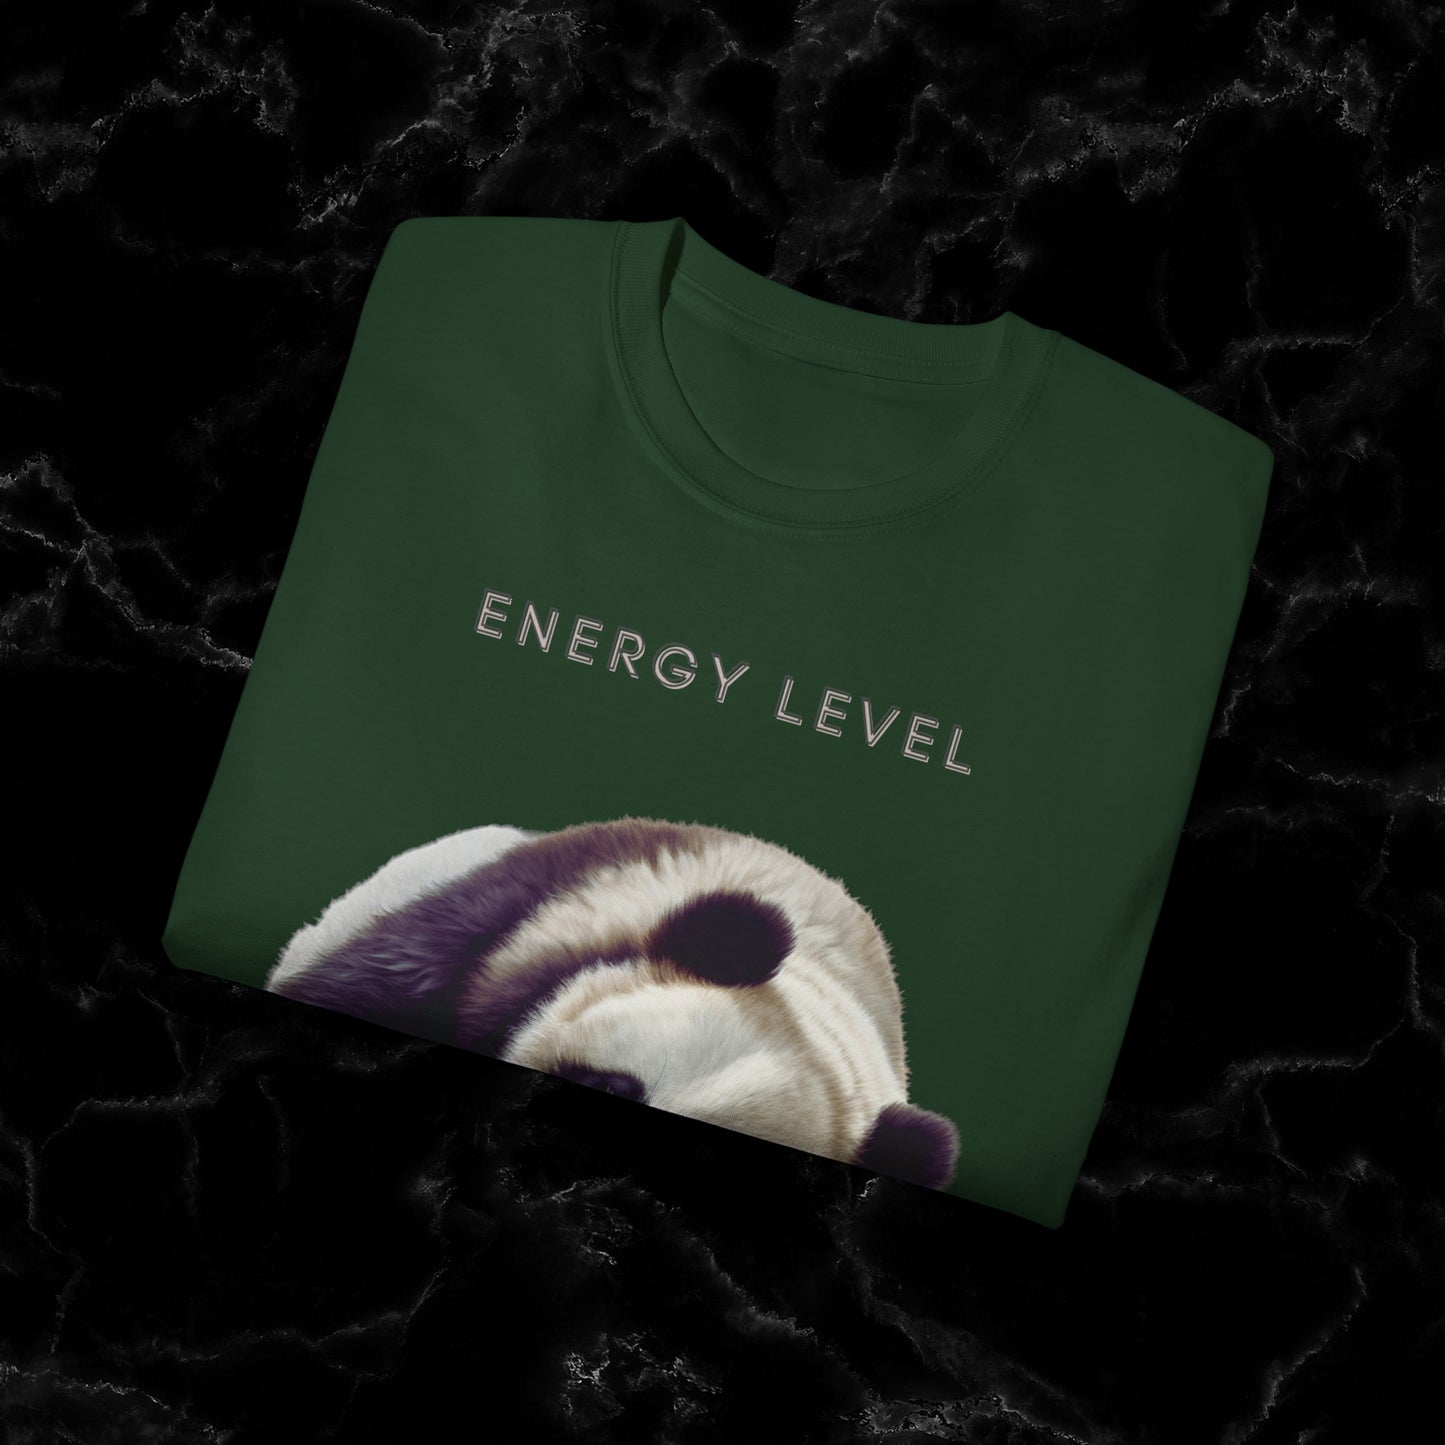 Nap Time Panda Unisex Funny Tee - Hilarious Panda Nap Design - Energy Level T-Shirt   